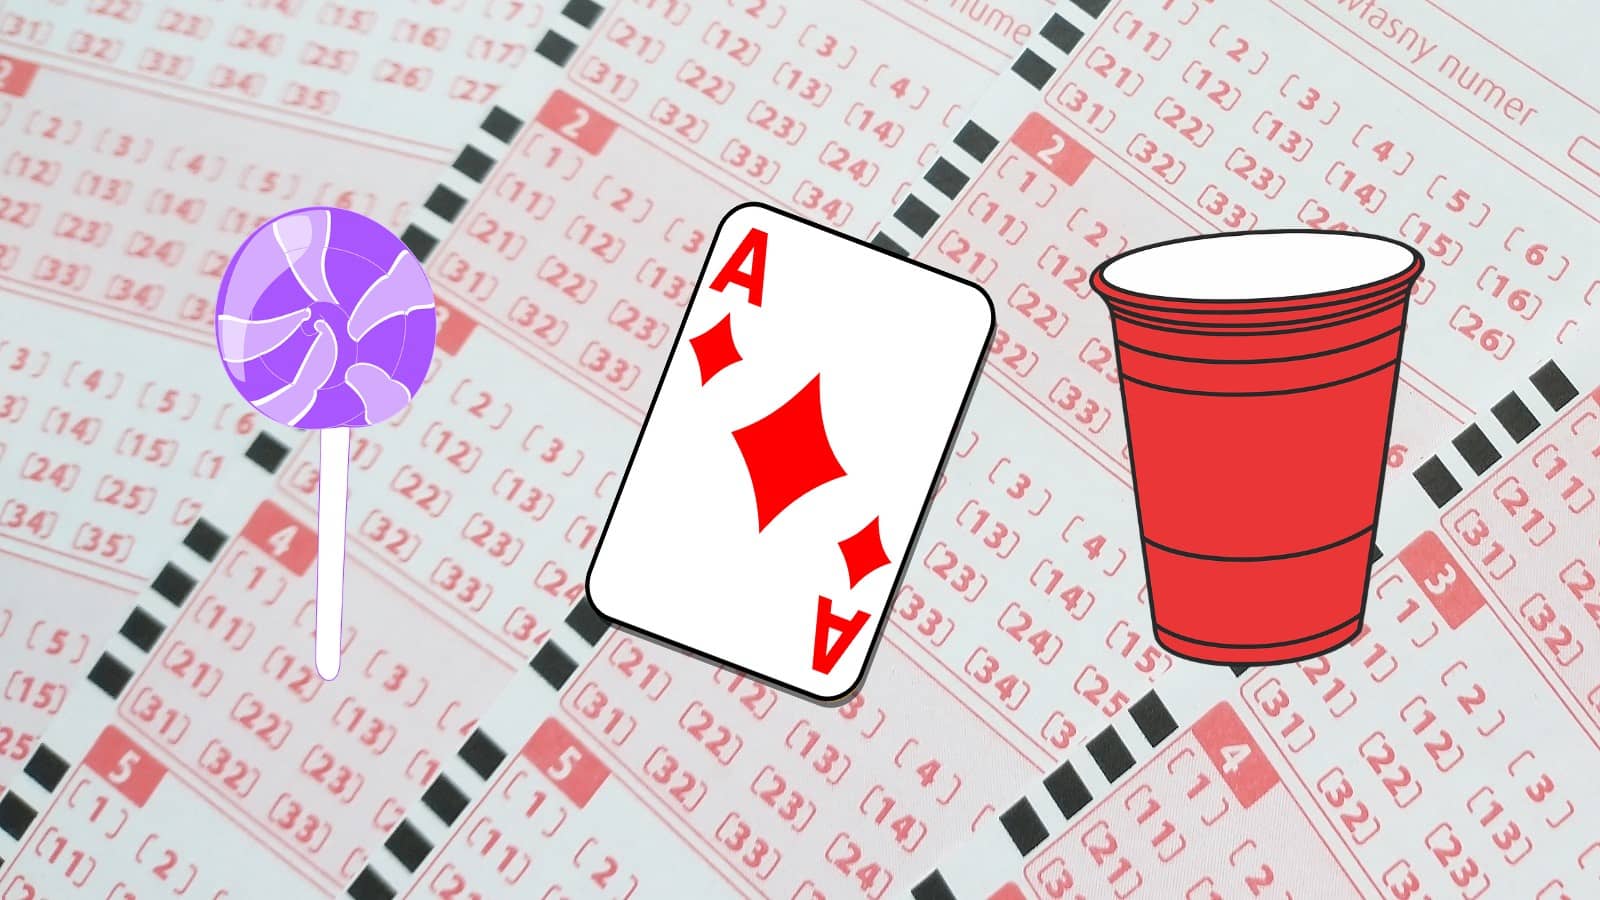 rysunki karty do gry, kubka i lizaka na tle kuponów lotto